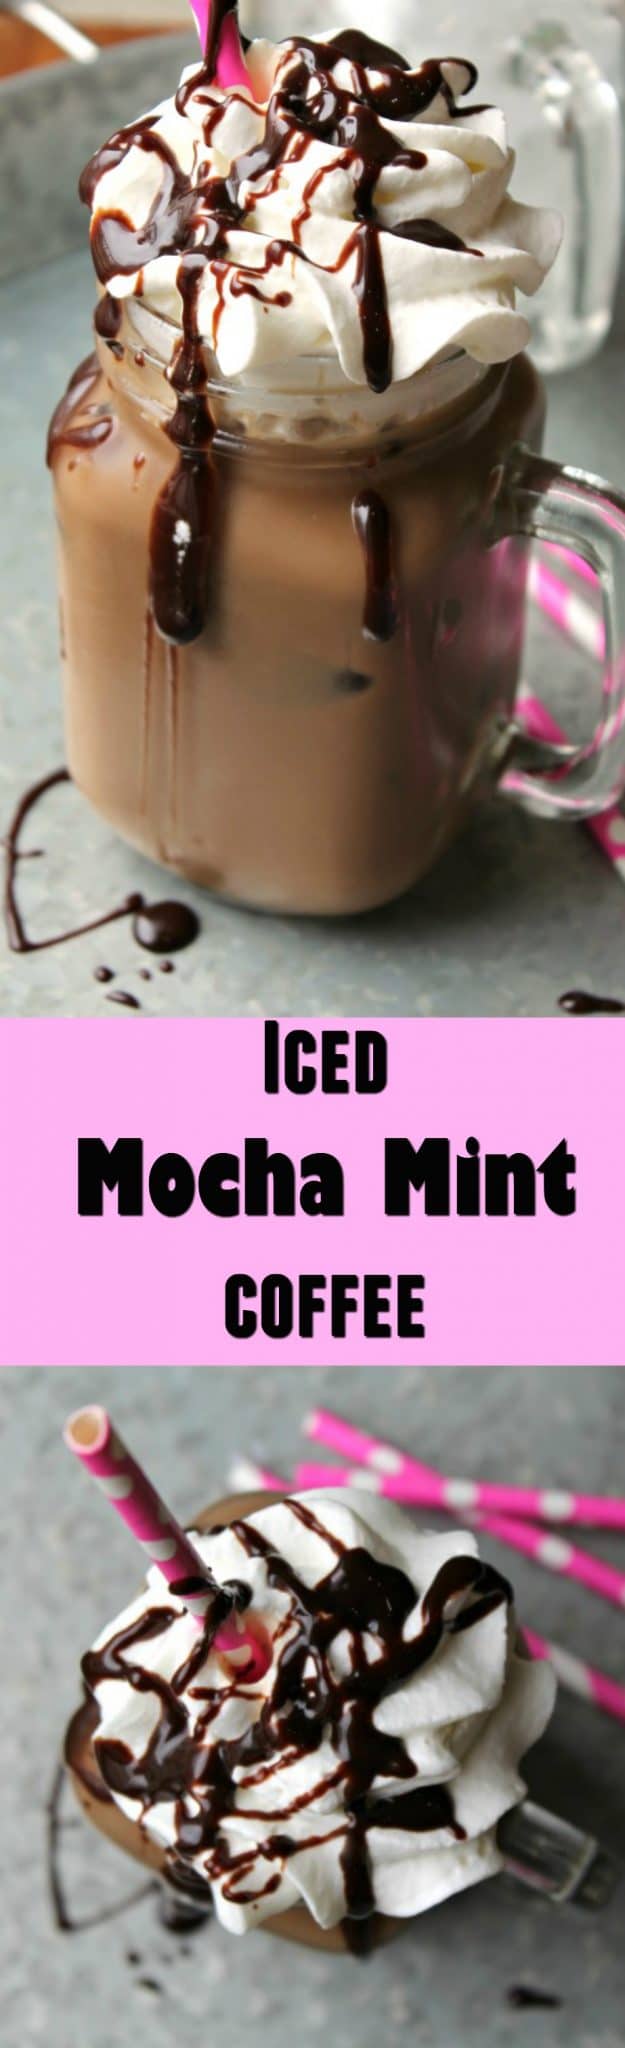 Iced Mocha Mint Coffee 